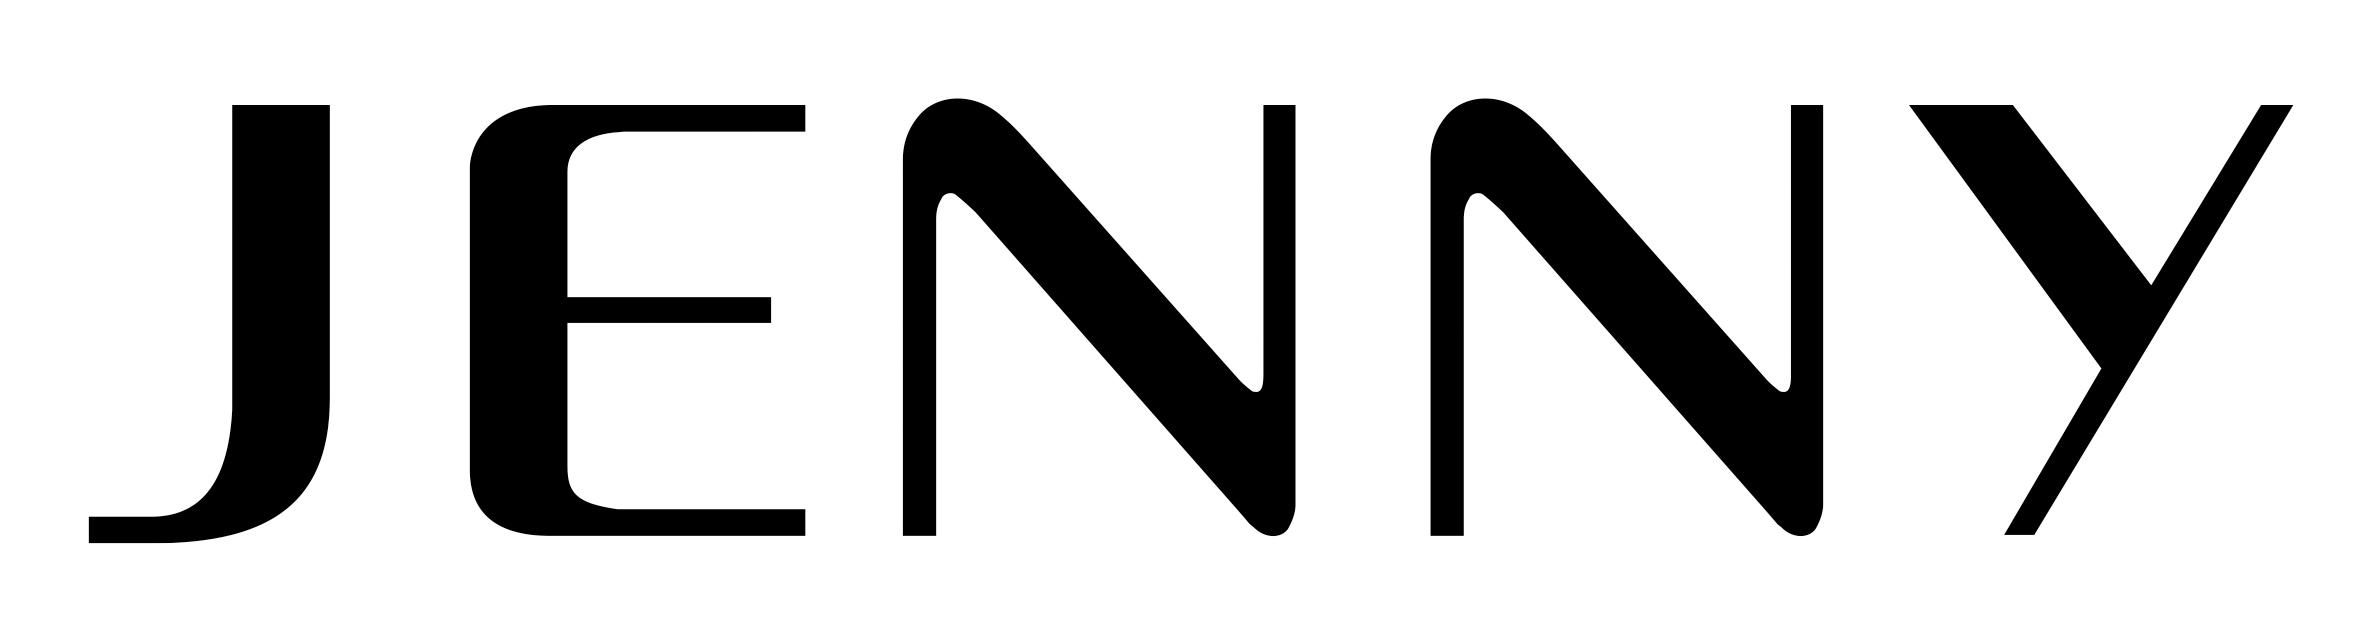 jenny-Logo-rgb.jpg